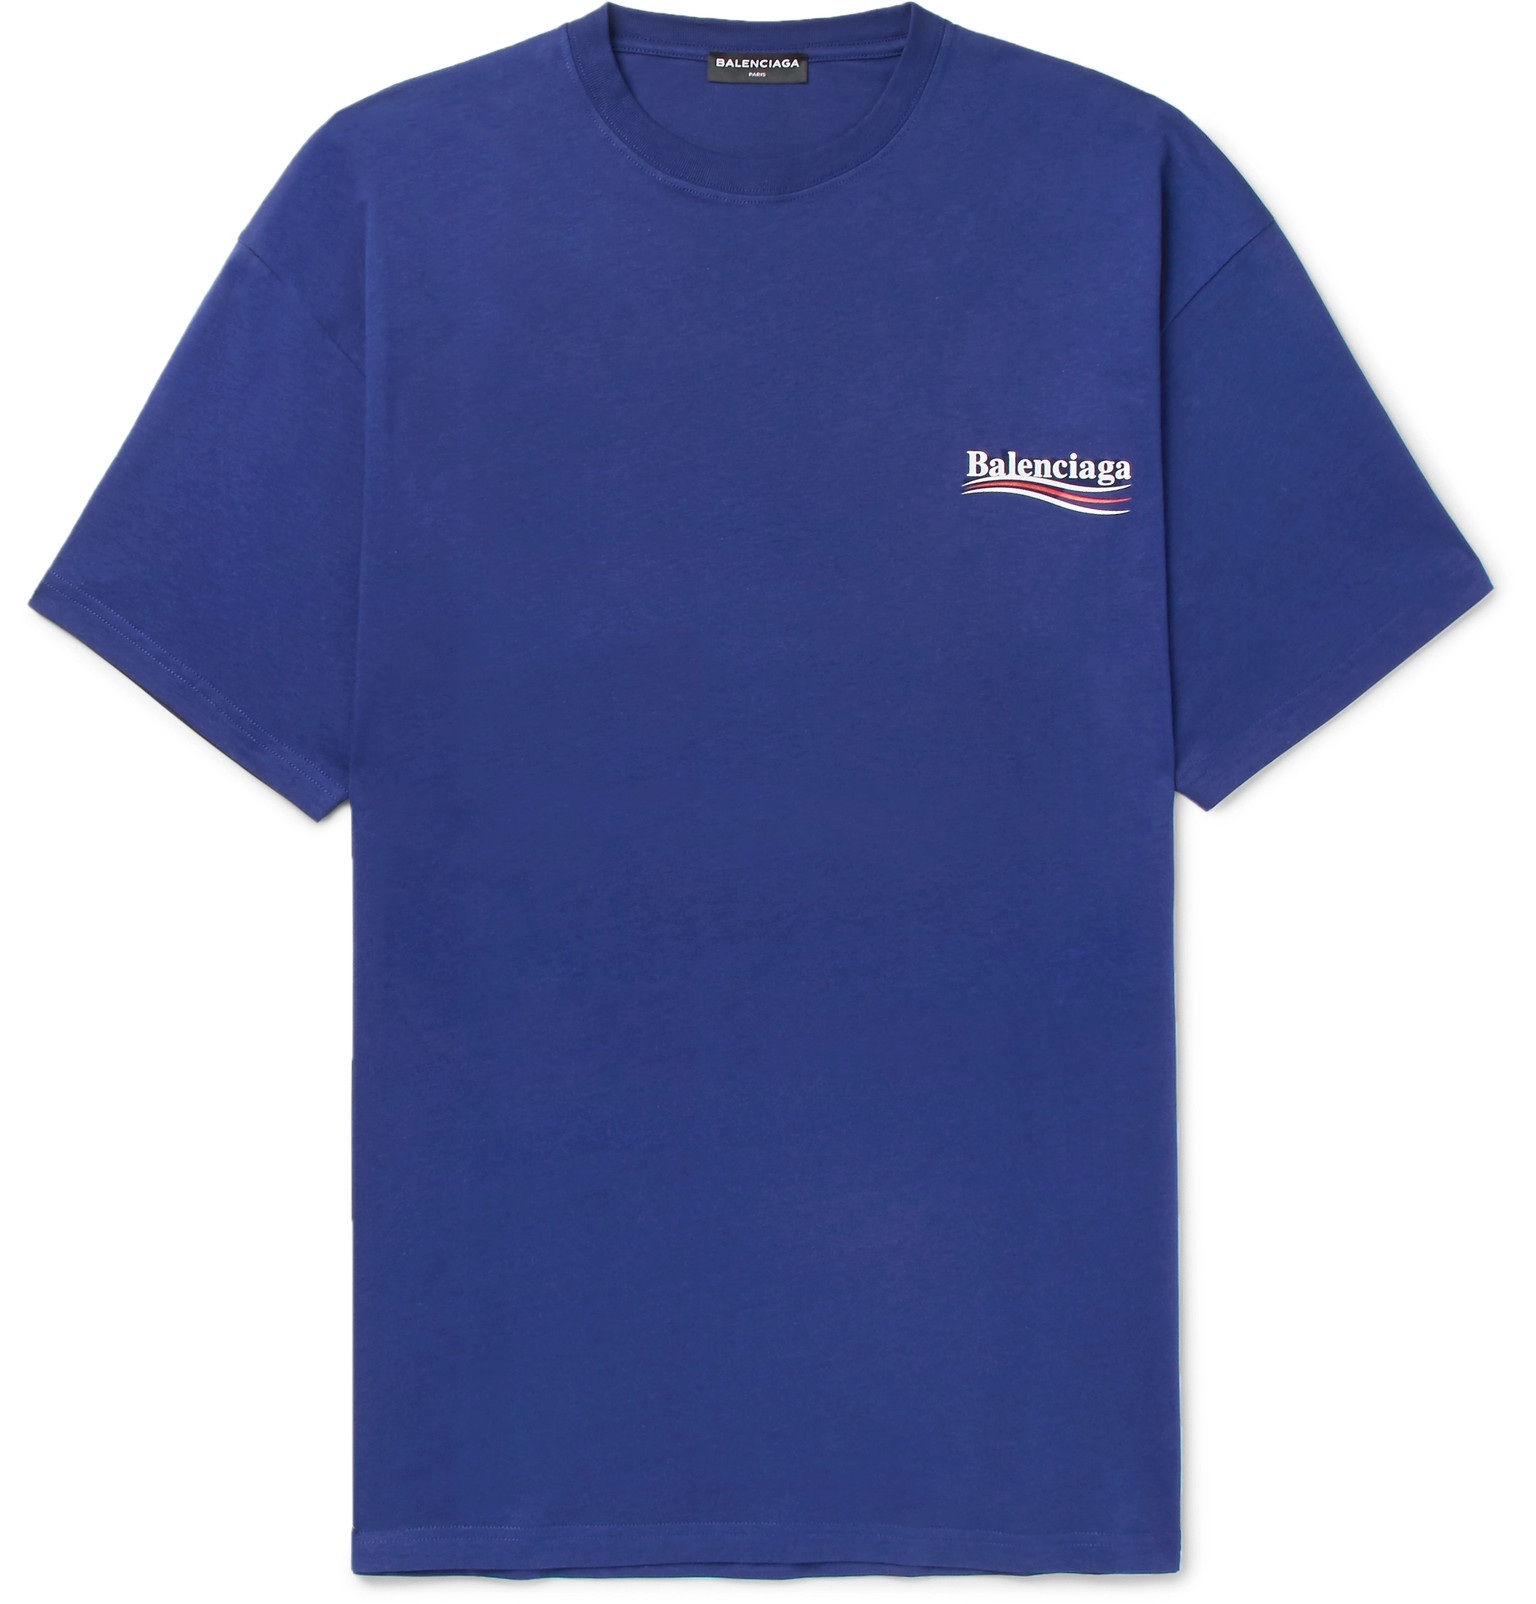 Balenciaga - Printed Cotton-Jersey T-Shirt - Men - Blue | The Fashionisto